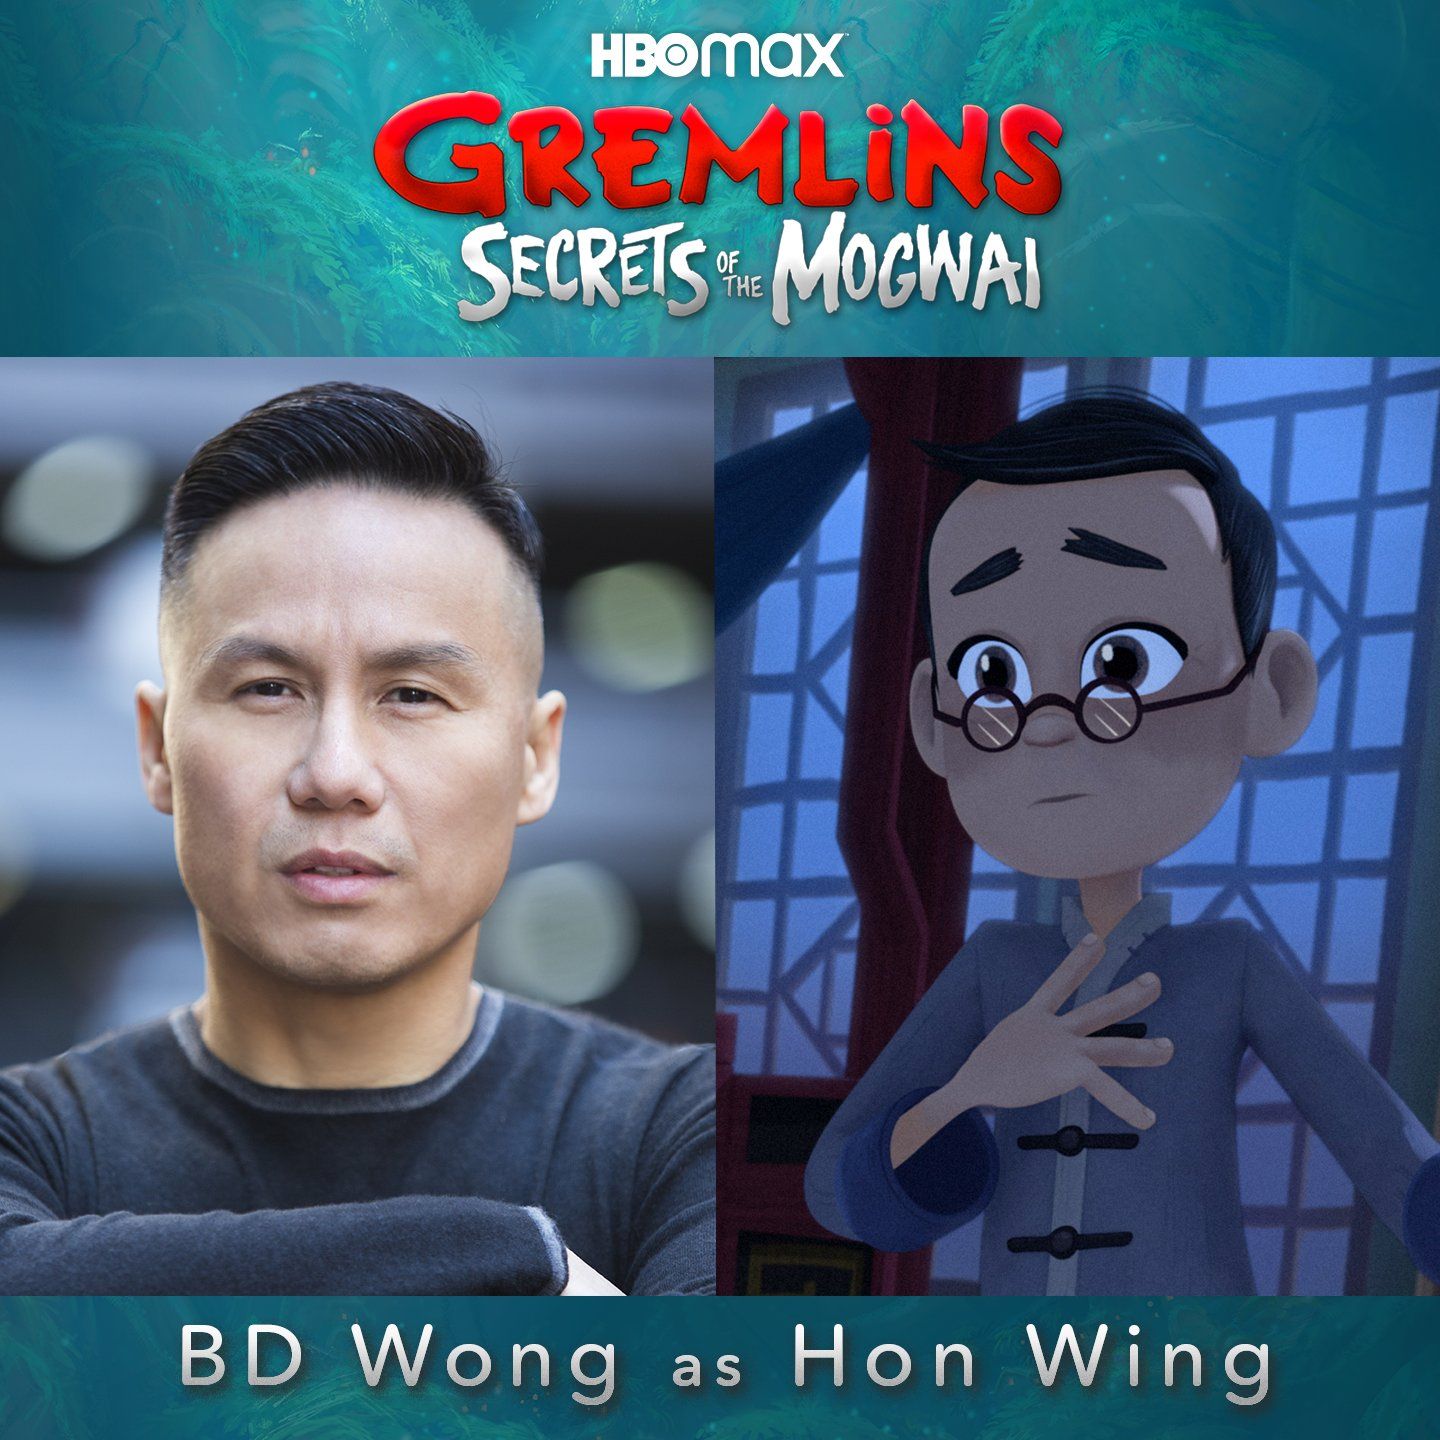 HBO Max Gremlins Secrets of the Mogwai BD Wong